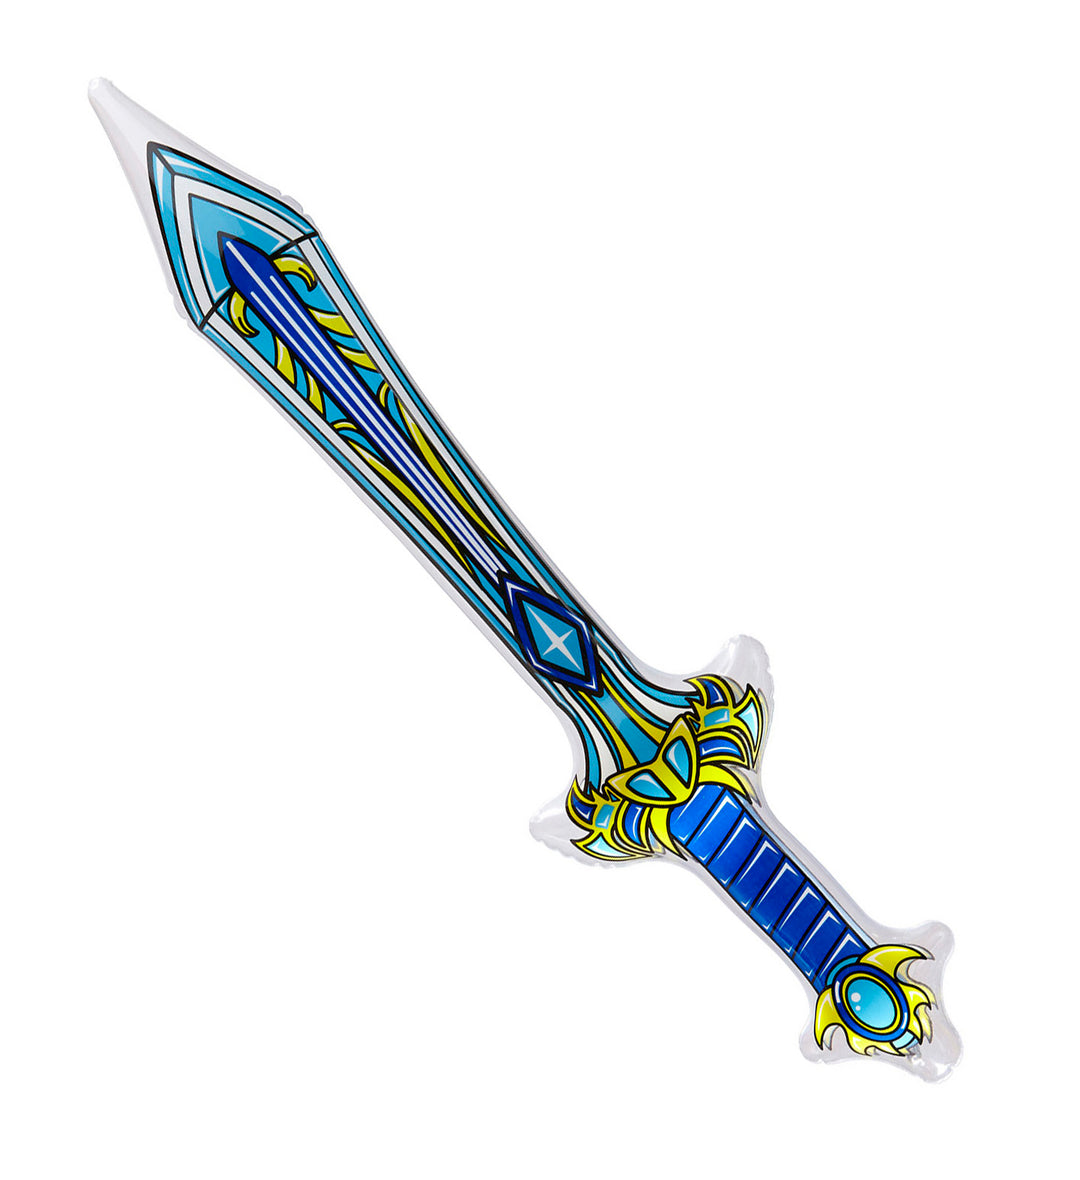 INFLATABLE MAGIC SWORD - BLUE 70 cm